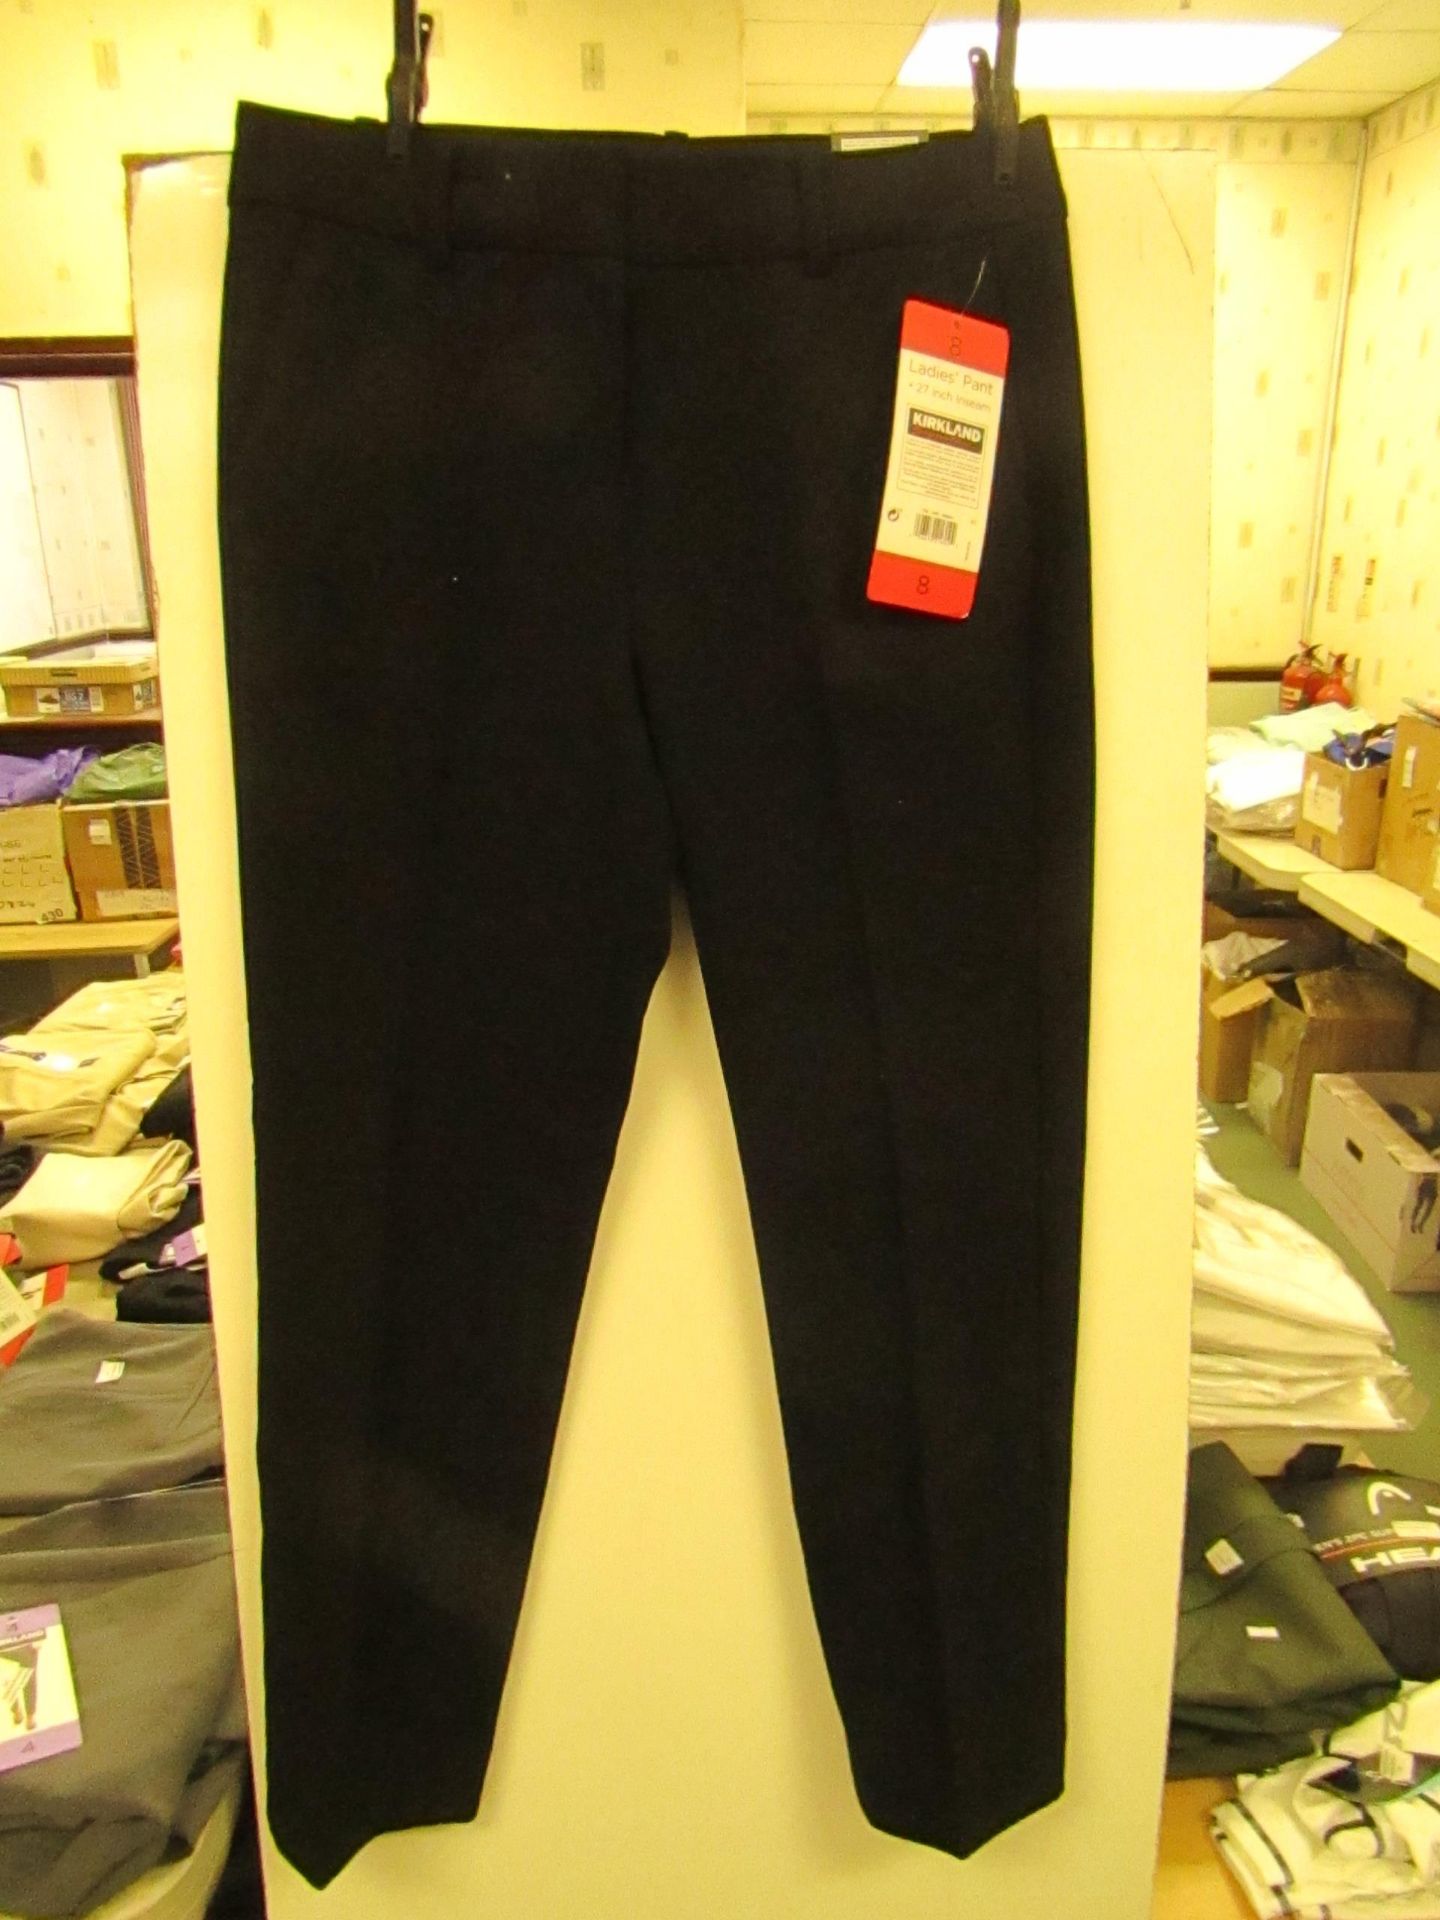 1X Kirkland Signature Ladies Pants - Size 8 - Black - New with tags